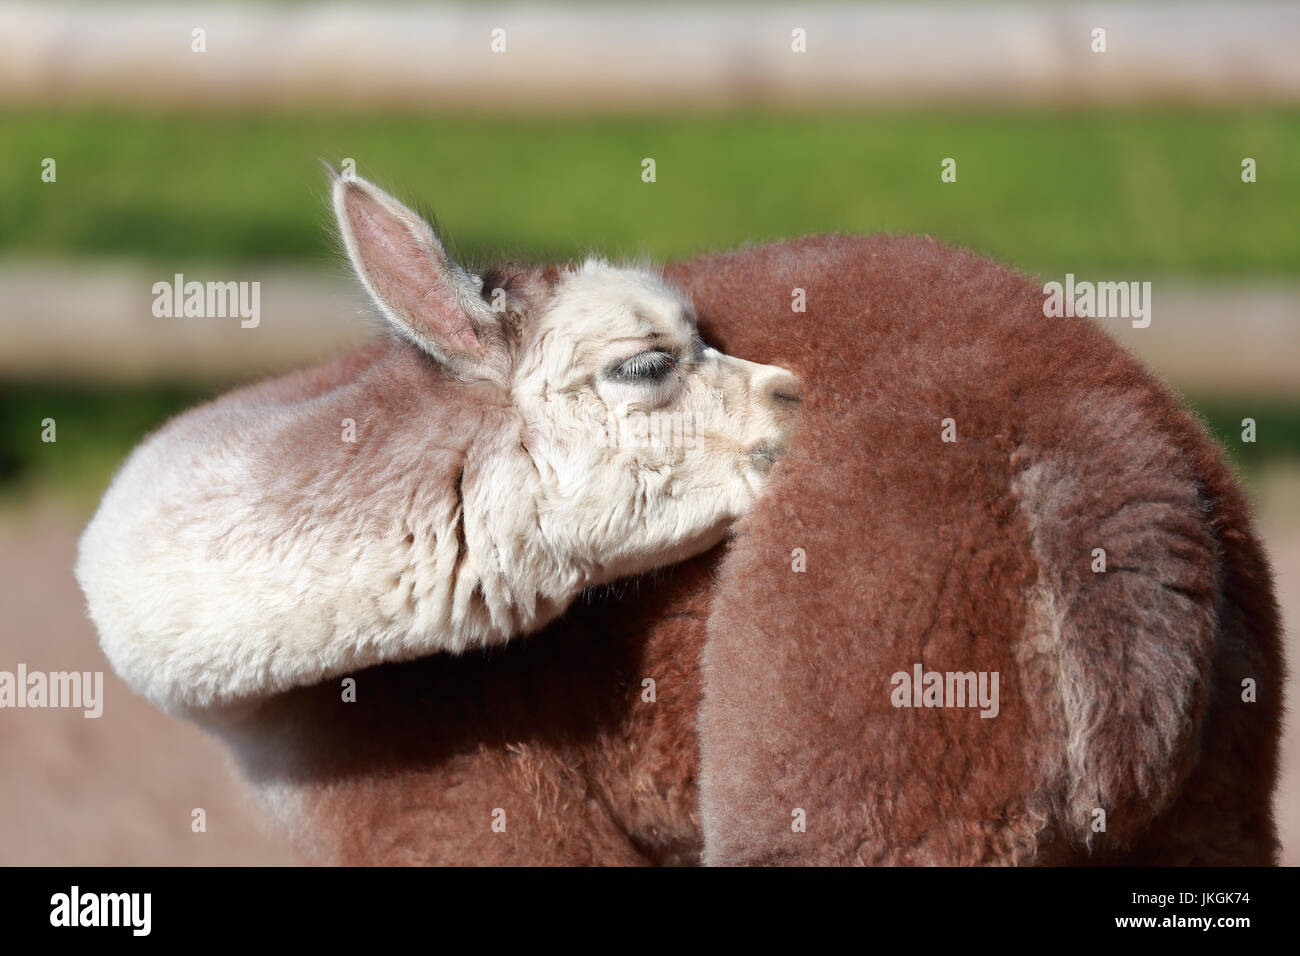 A young Alpaca preening its fur Stock Photo